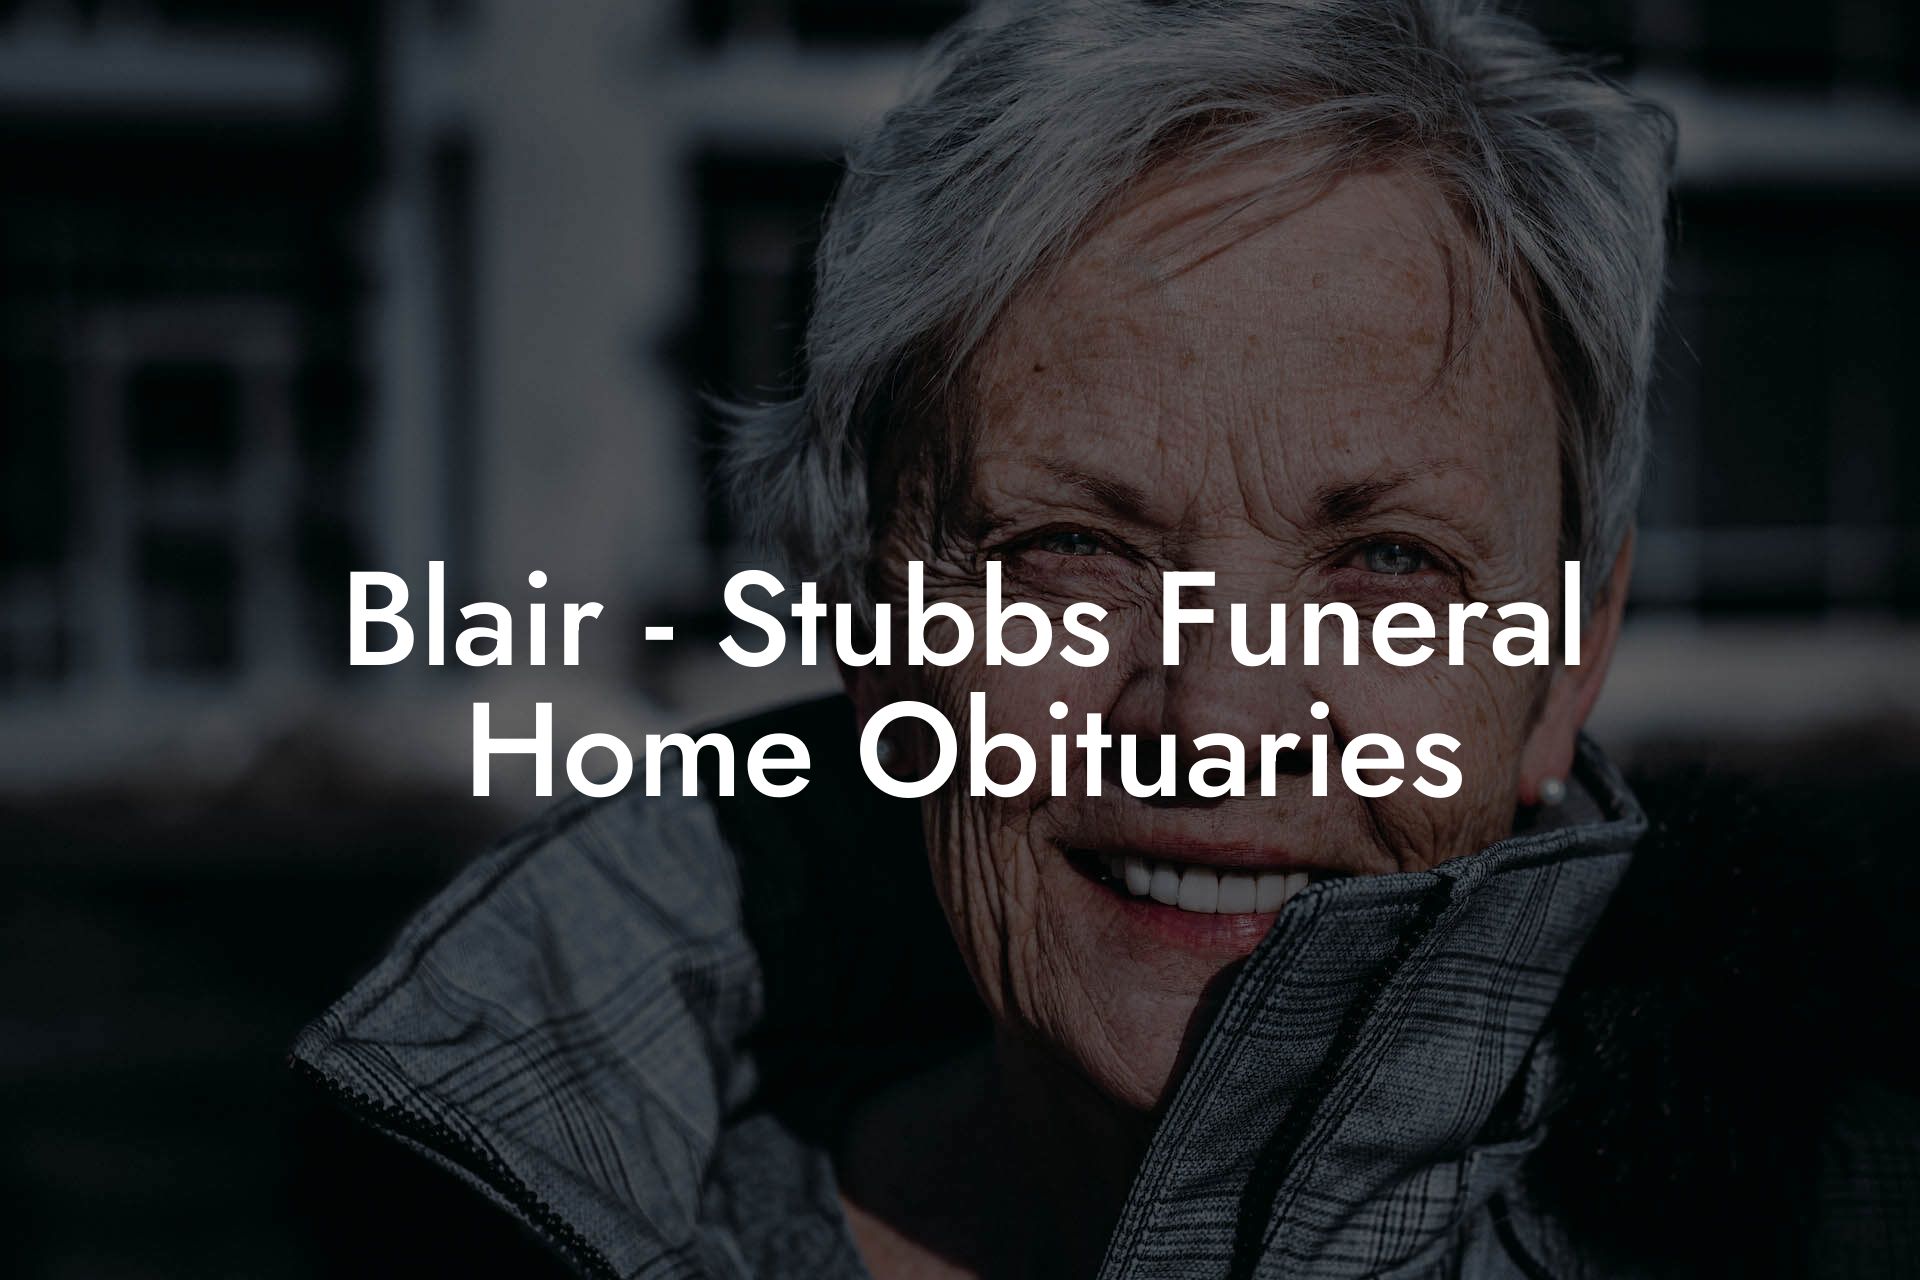 Blair Stubbs Funeral Home Obituaries